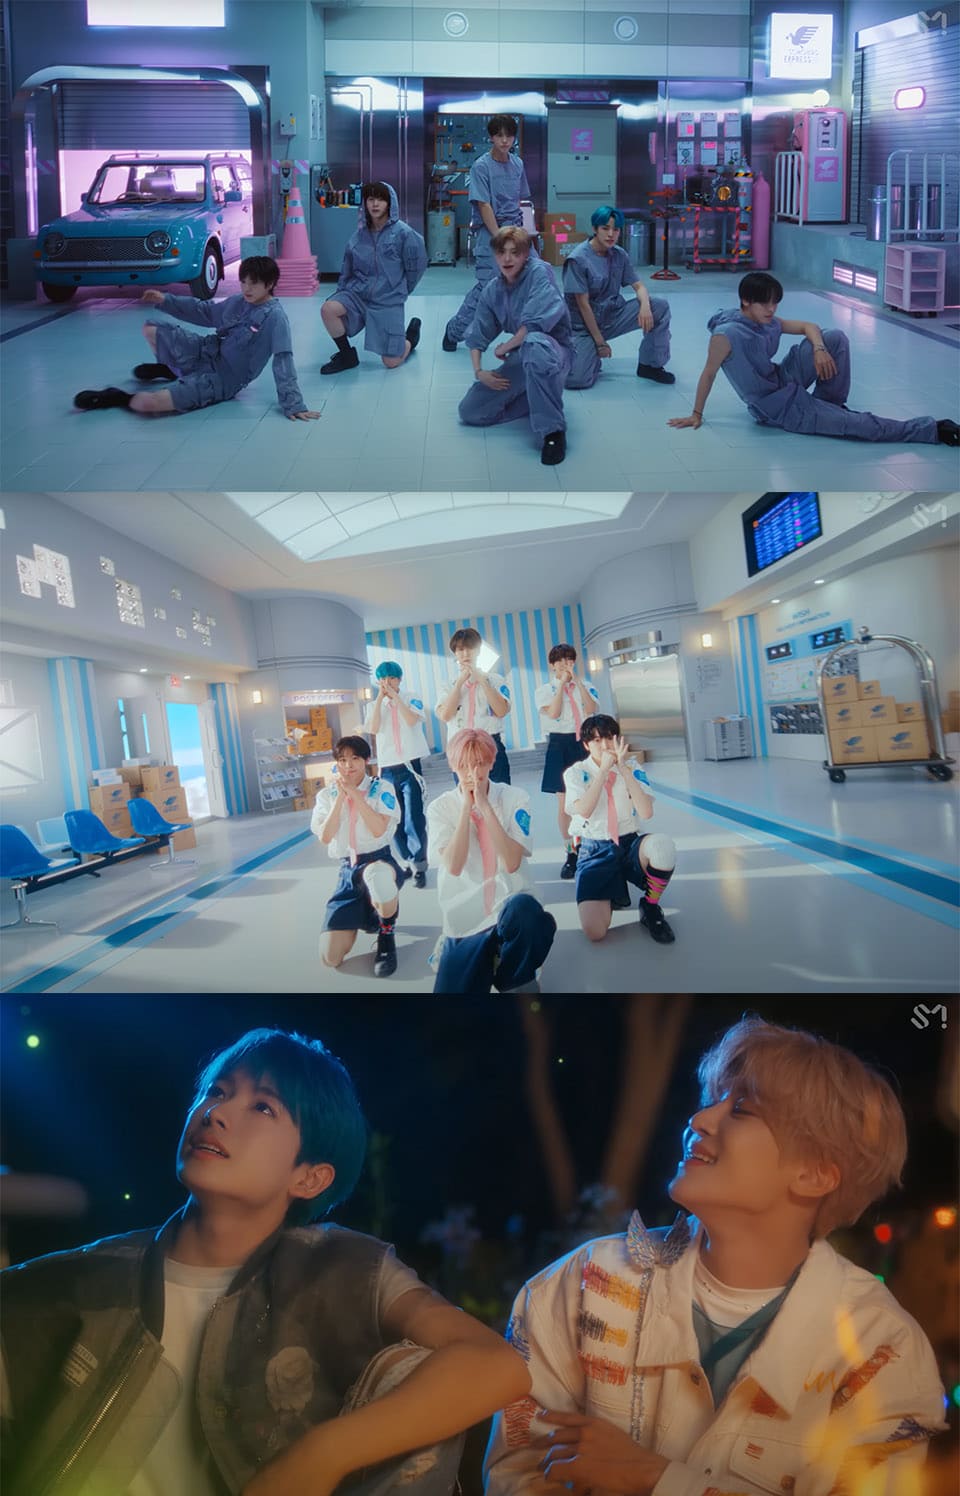 Image : NCT WISH 'Songbird' MV Screenshot  ⓒ SM Entertainment